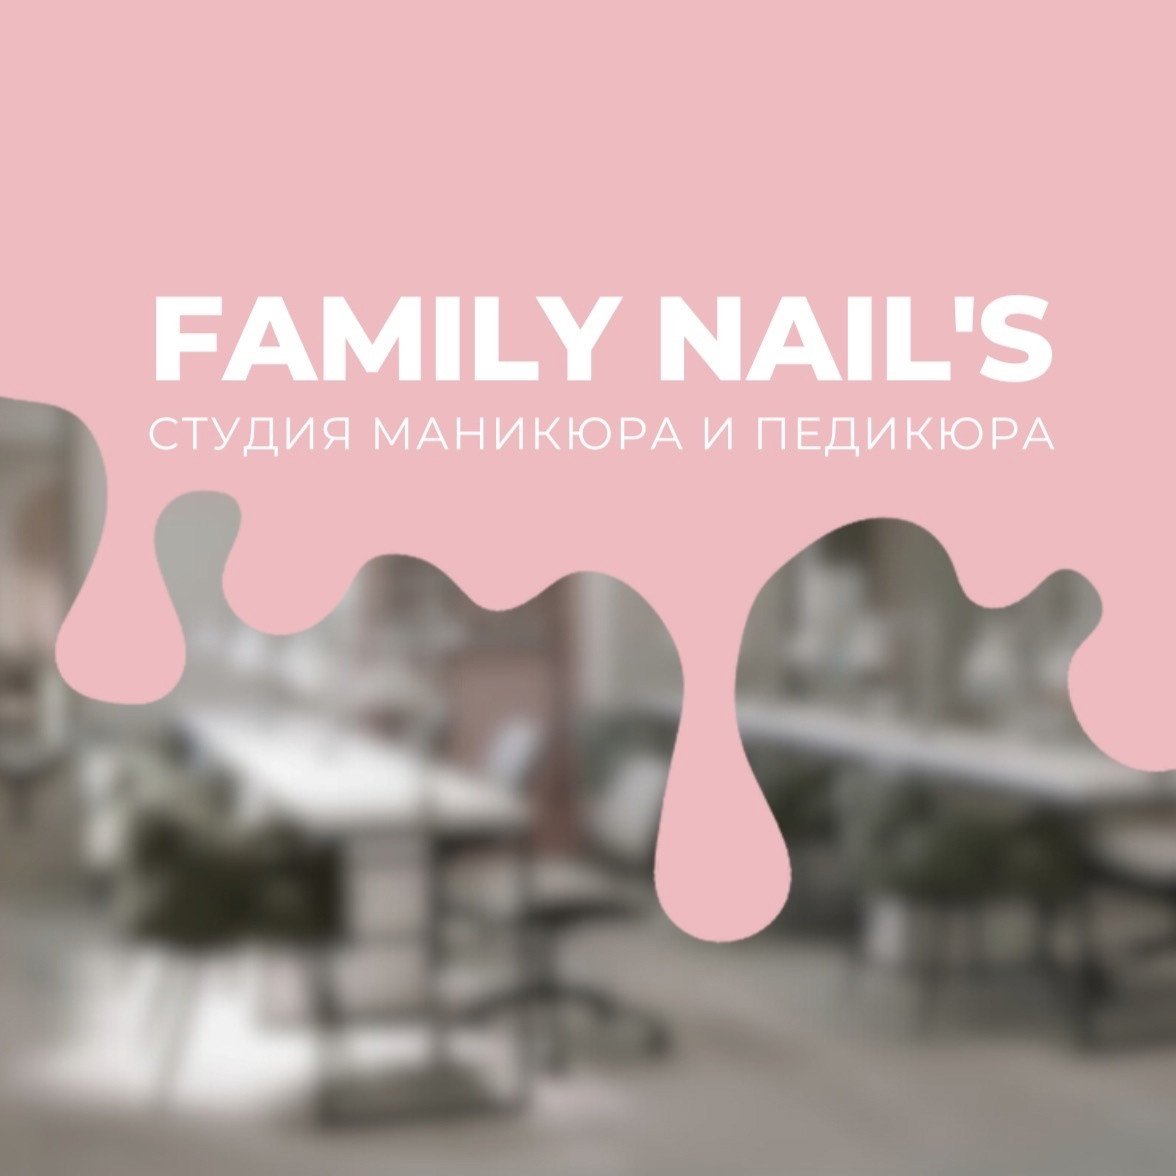 Студия Family nails